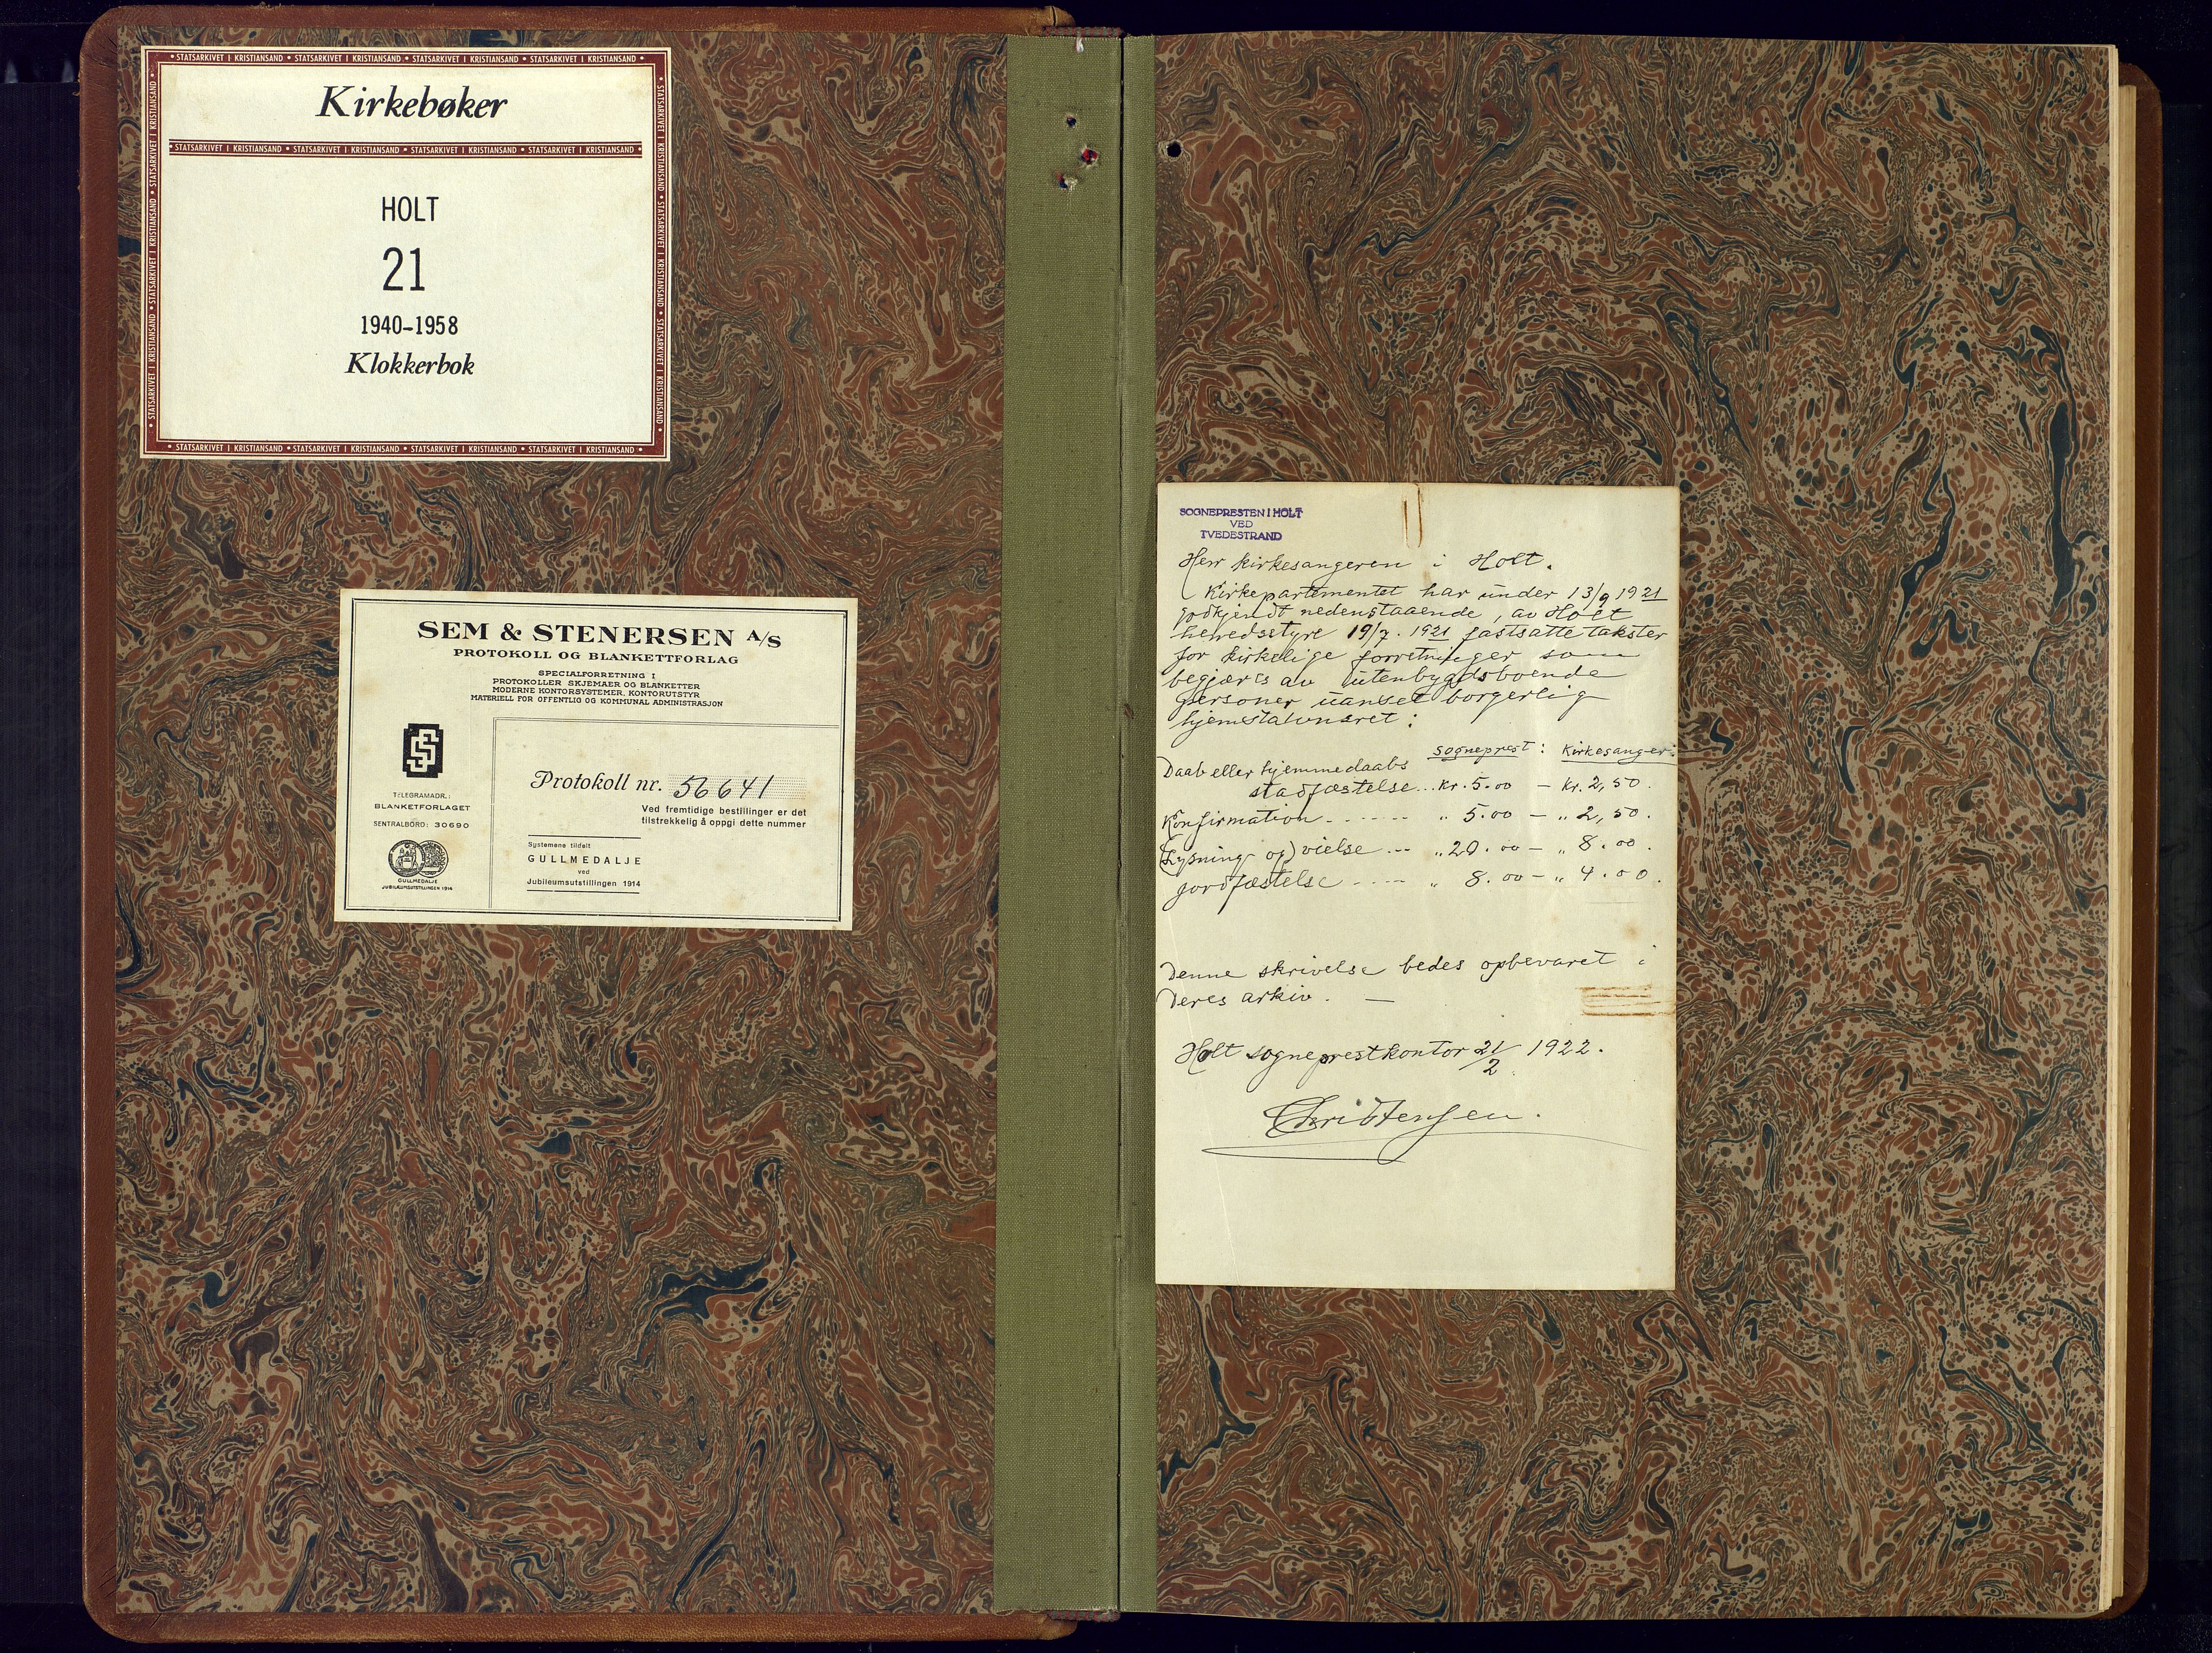 Holt sokneprestkontor, SAK/1111-0021/F/Fb/L0013: Parish register (copy) no. B-13, 1940-1958